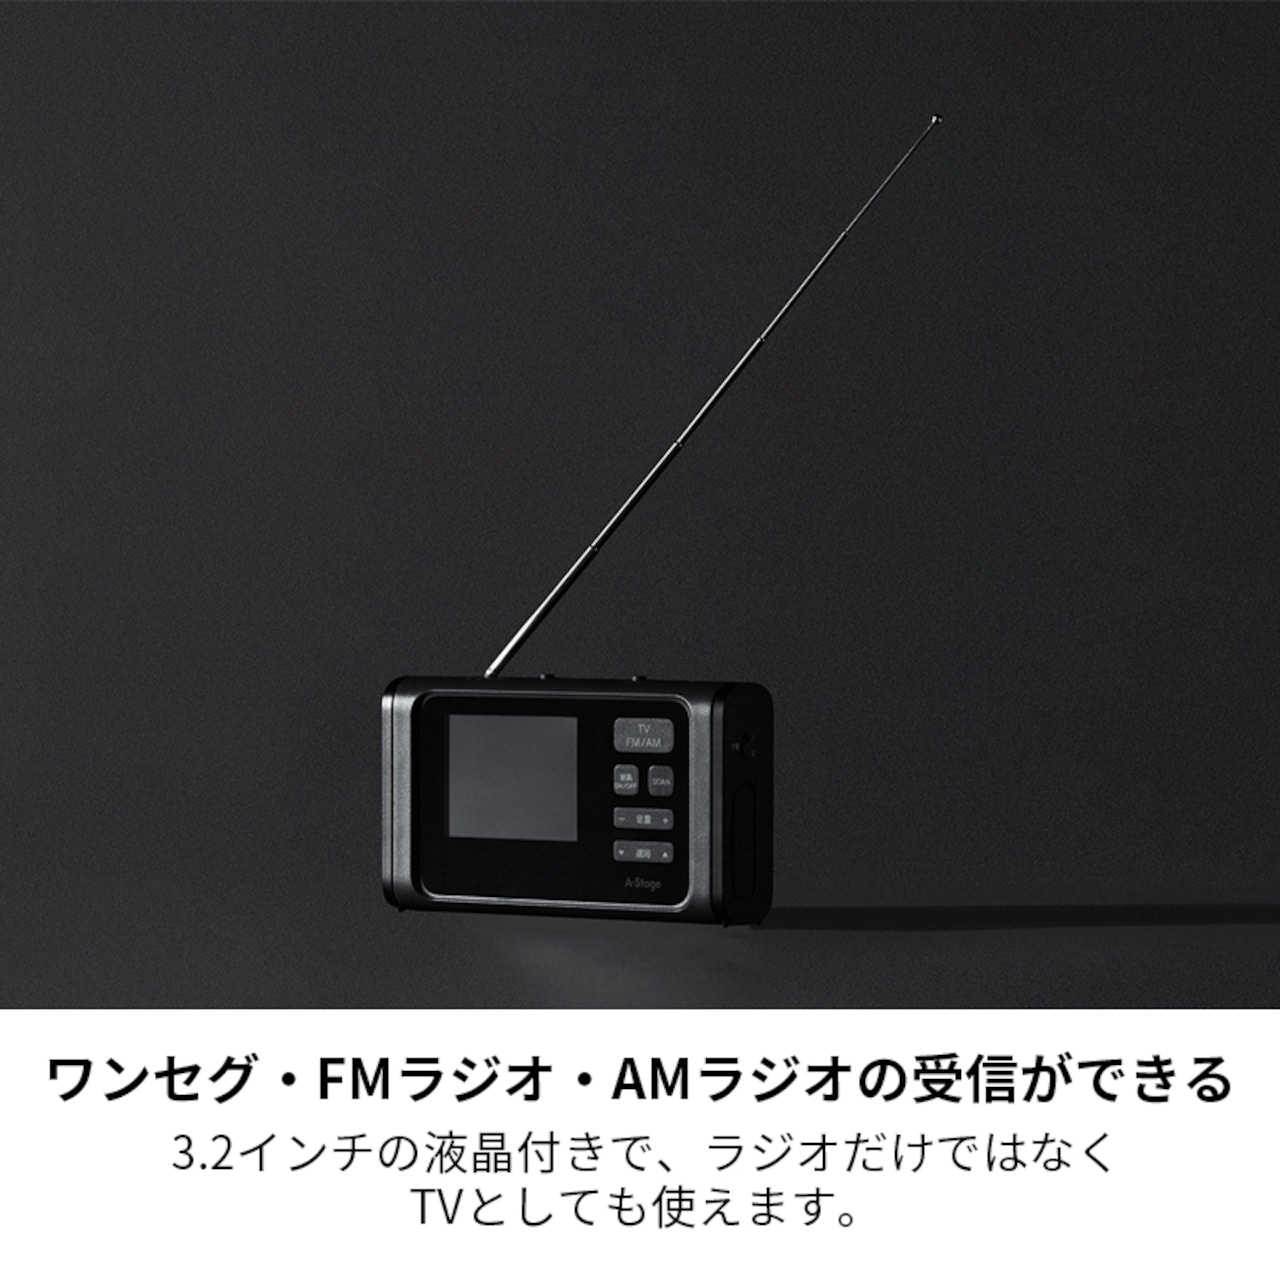 A-Stage 3.2インチ液晶ワンセグTV ラジオ OR01A-03BK